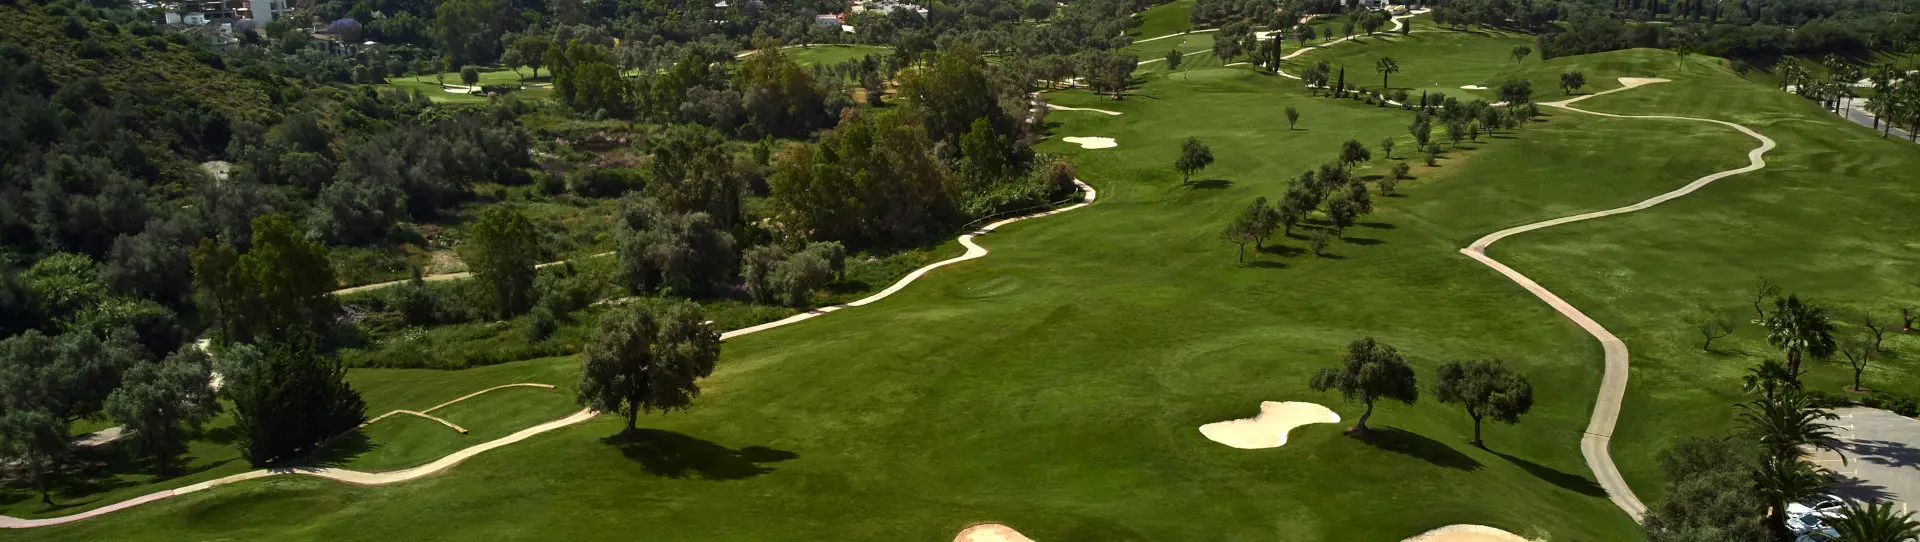 Spain Golf Driving Range - Marbella Golf Country Club Practice Facilities - Photo 2